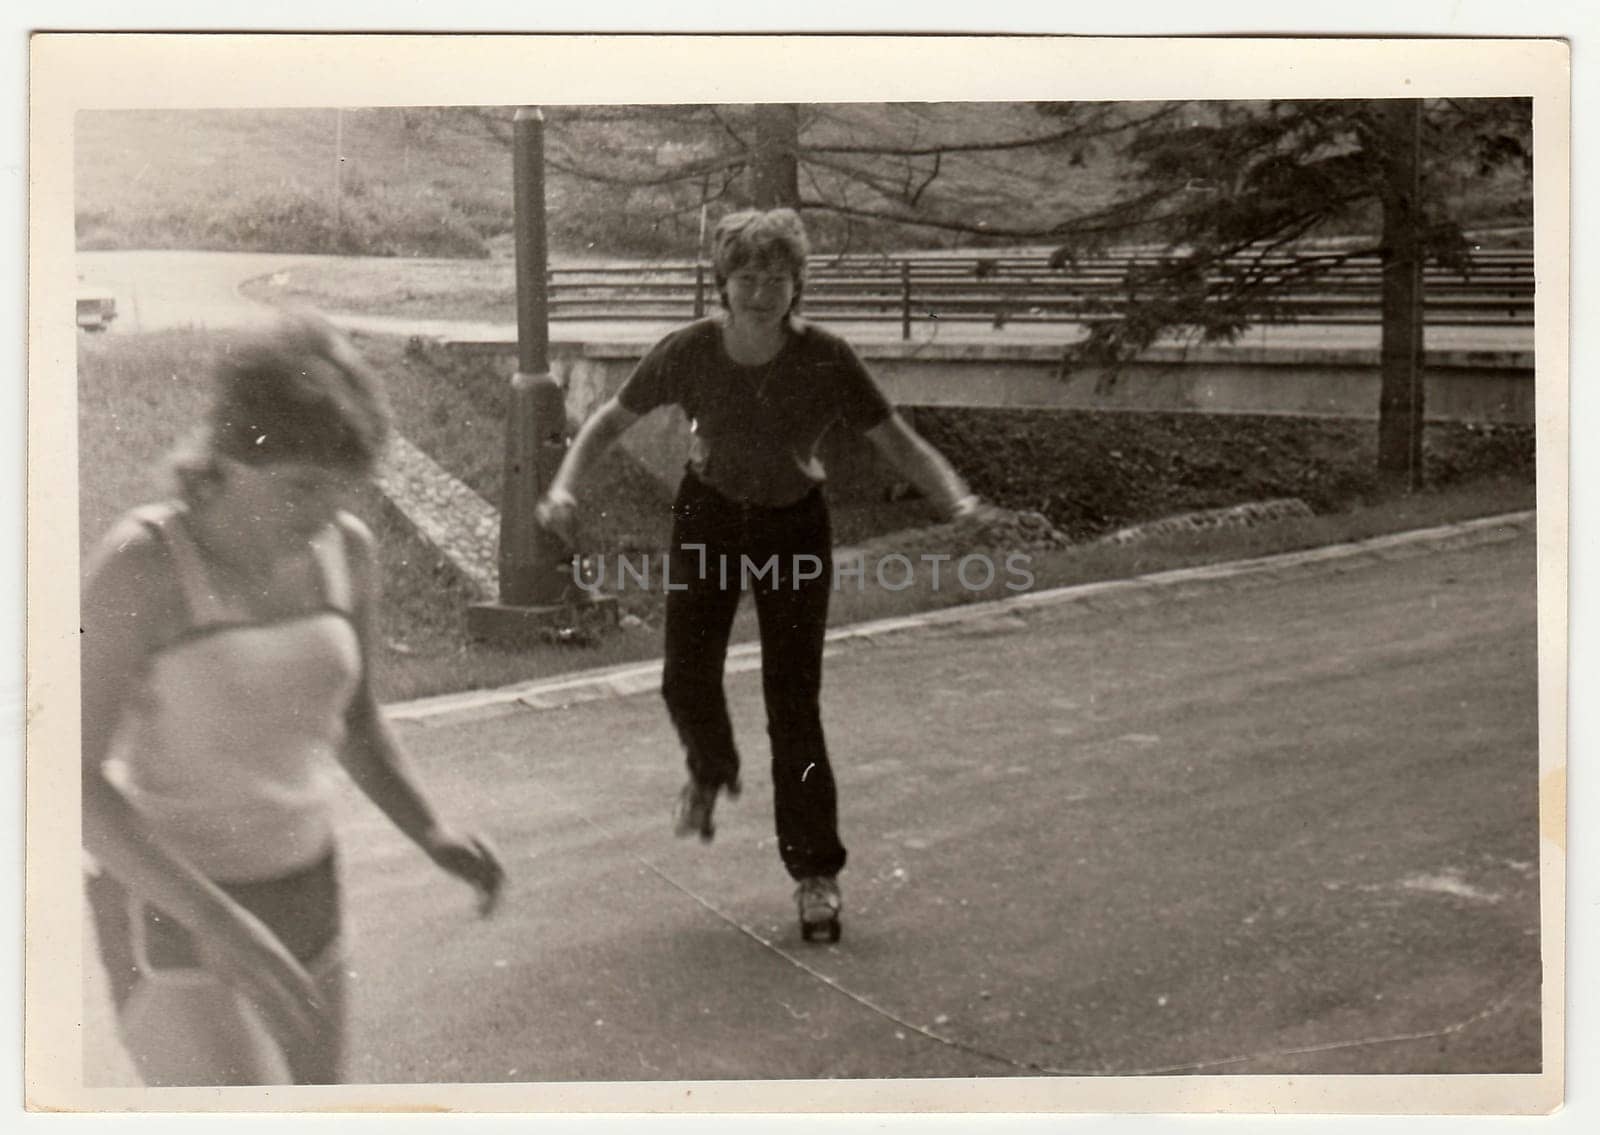 THE CZECHOSLOVAK SOCIALIST REPUBLIC - CIRCA 1970s: Retro photo shows girl who rides on roller skates. Black and white vintage photography.